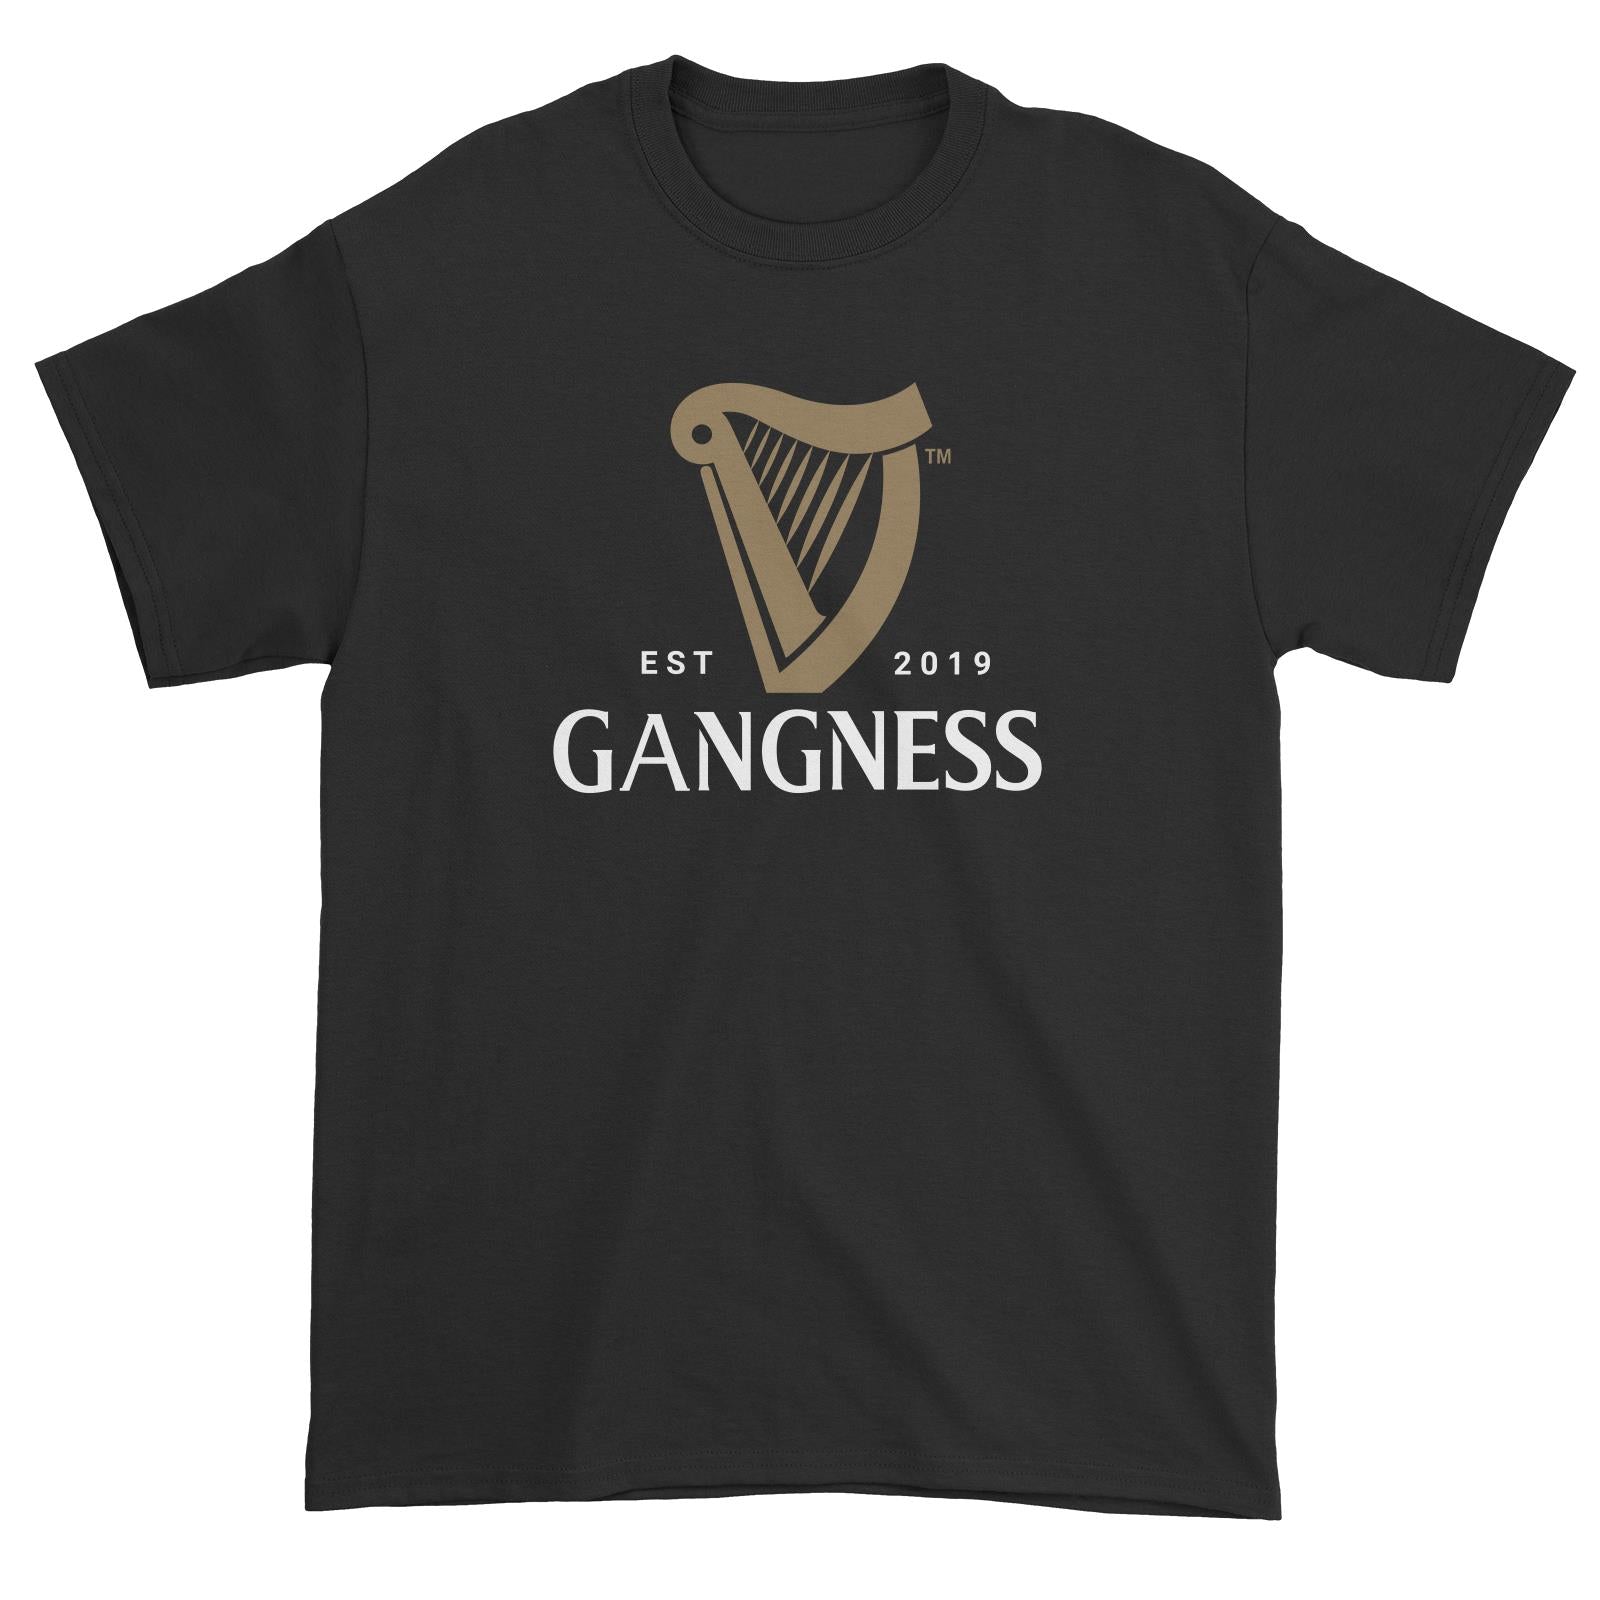 Slang Statement Gangness Unisex T-Shirt